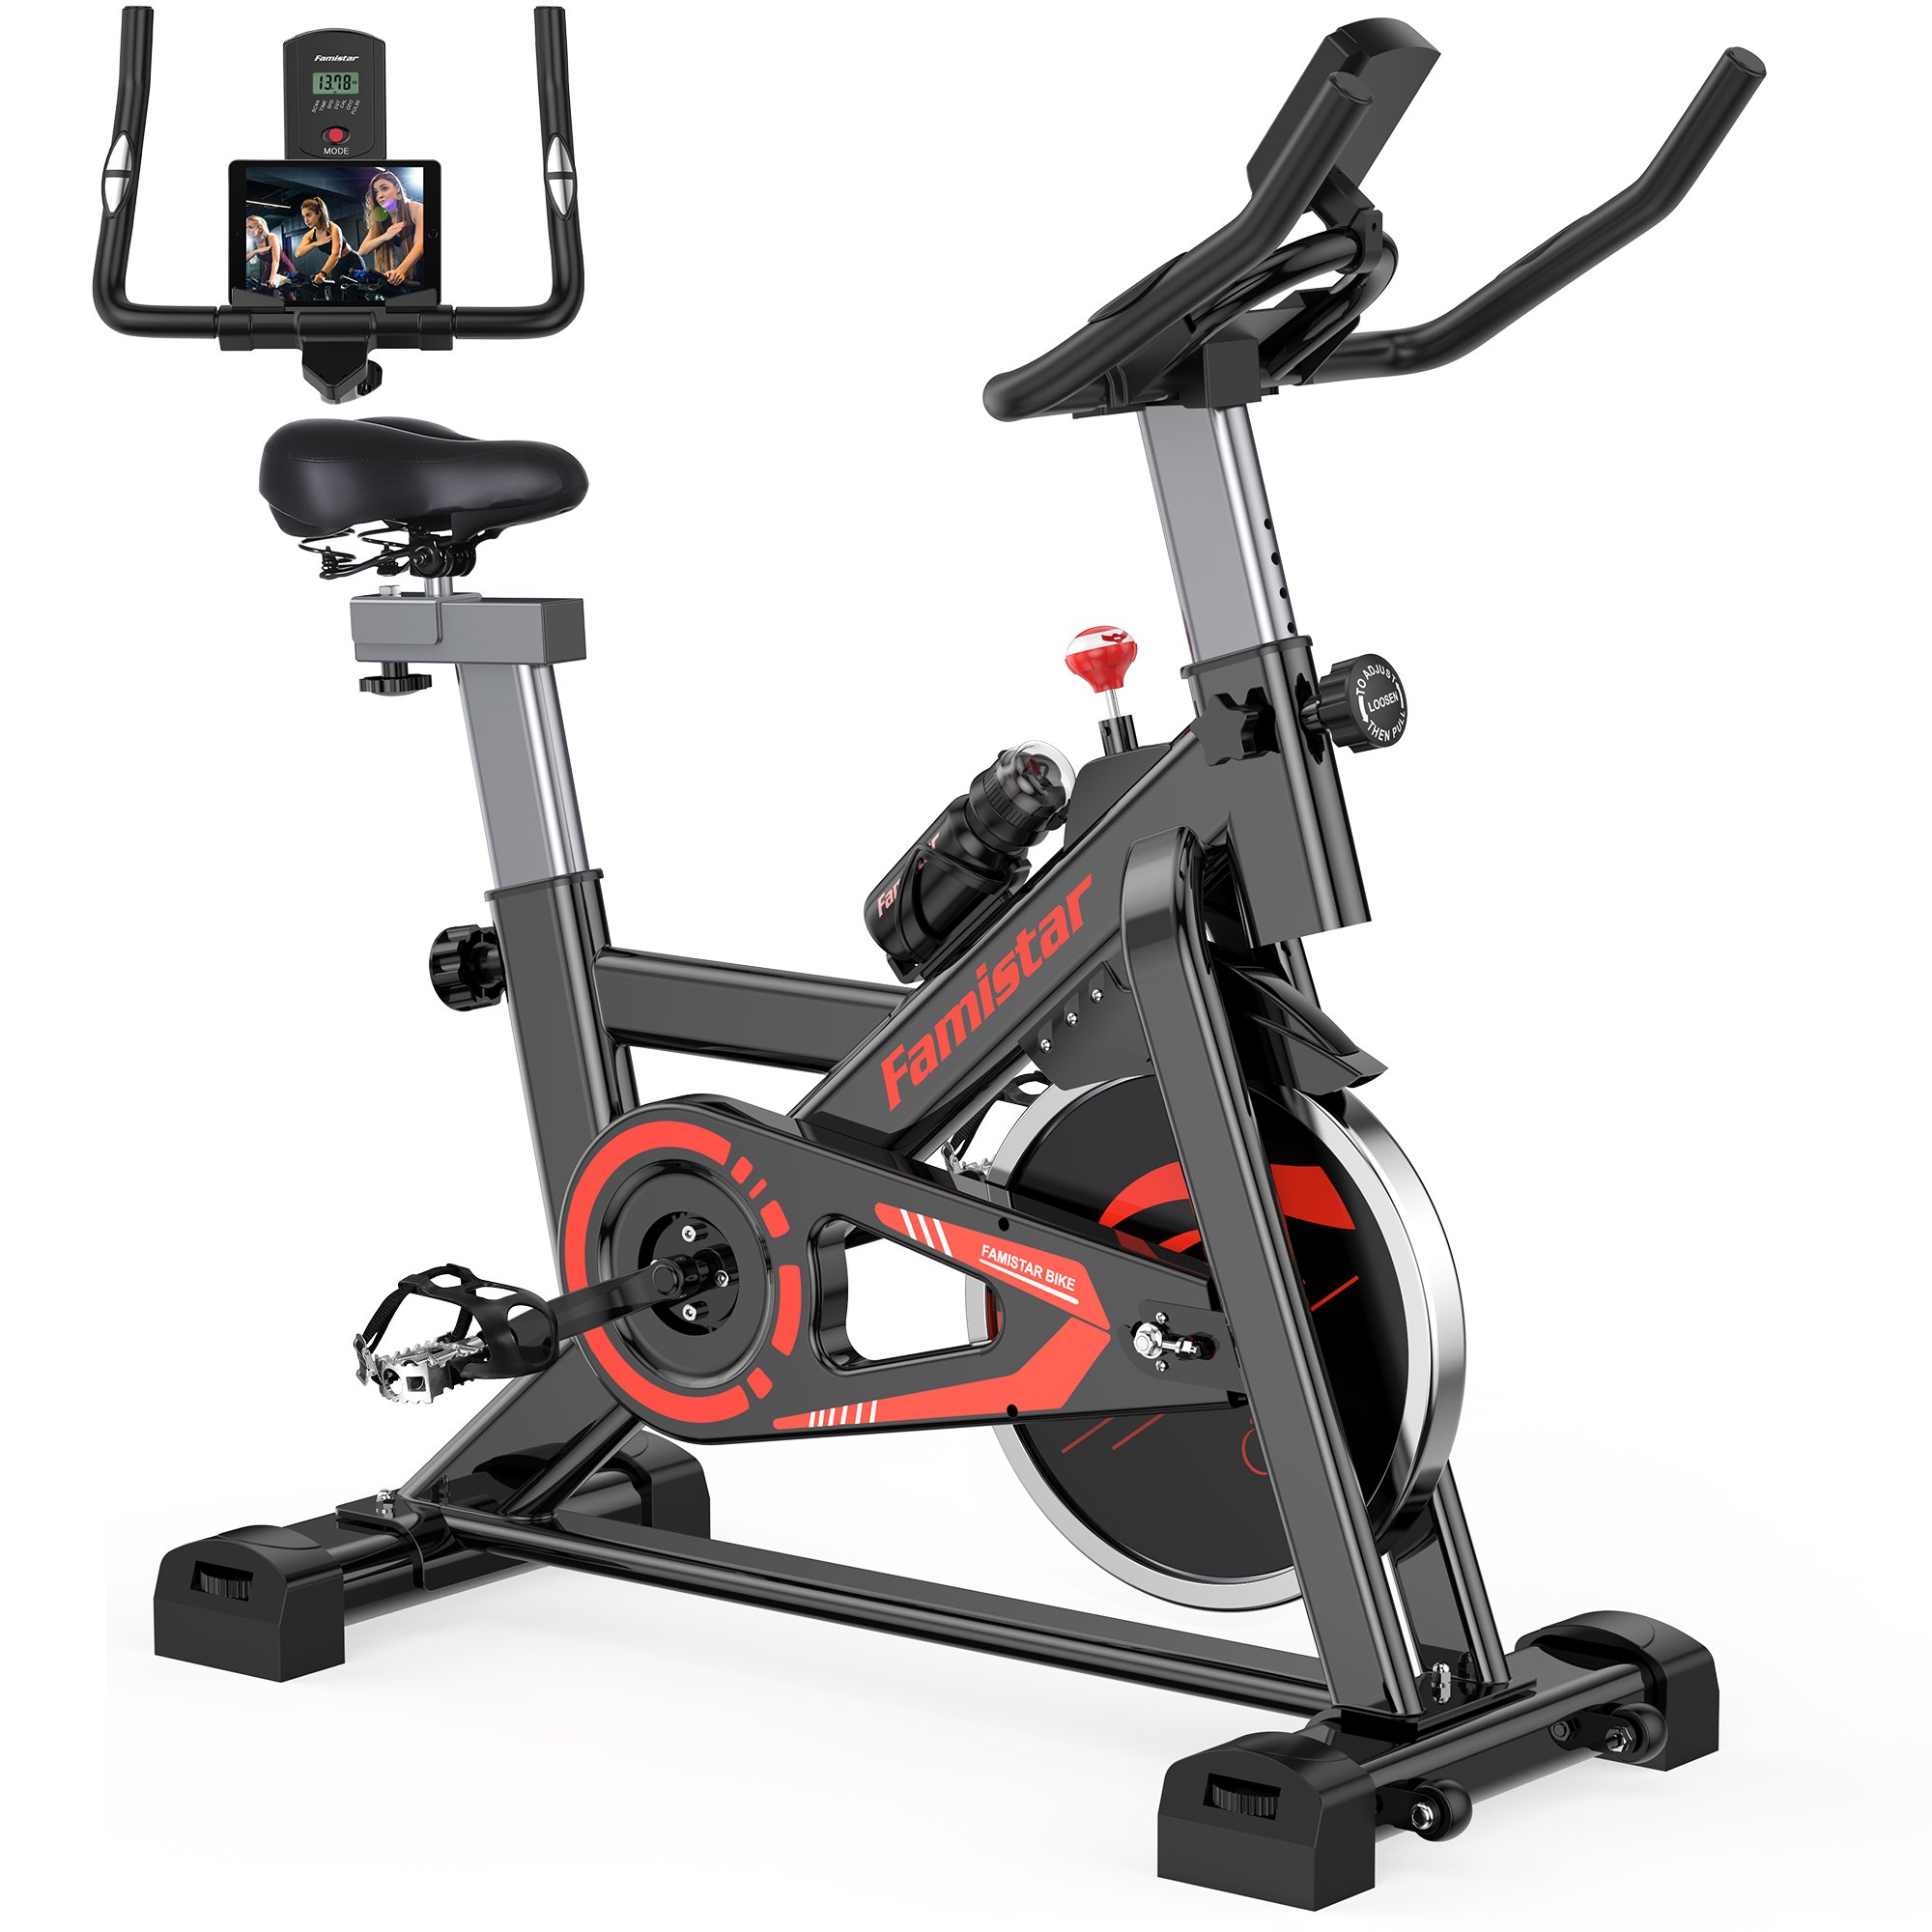 Famistar LCD 45Lbs Exercise Bike(Red&Black) $179.99